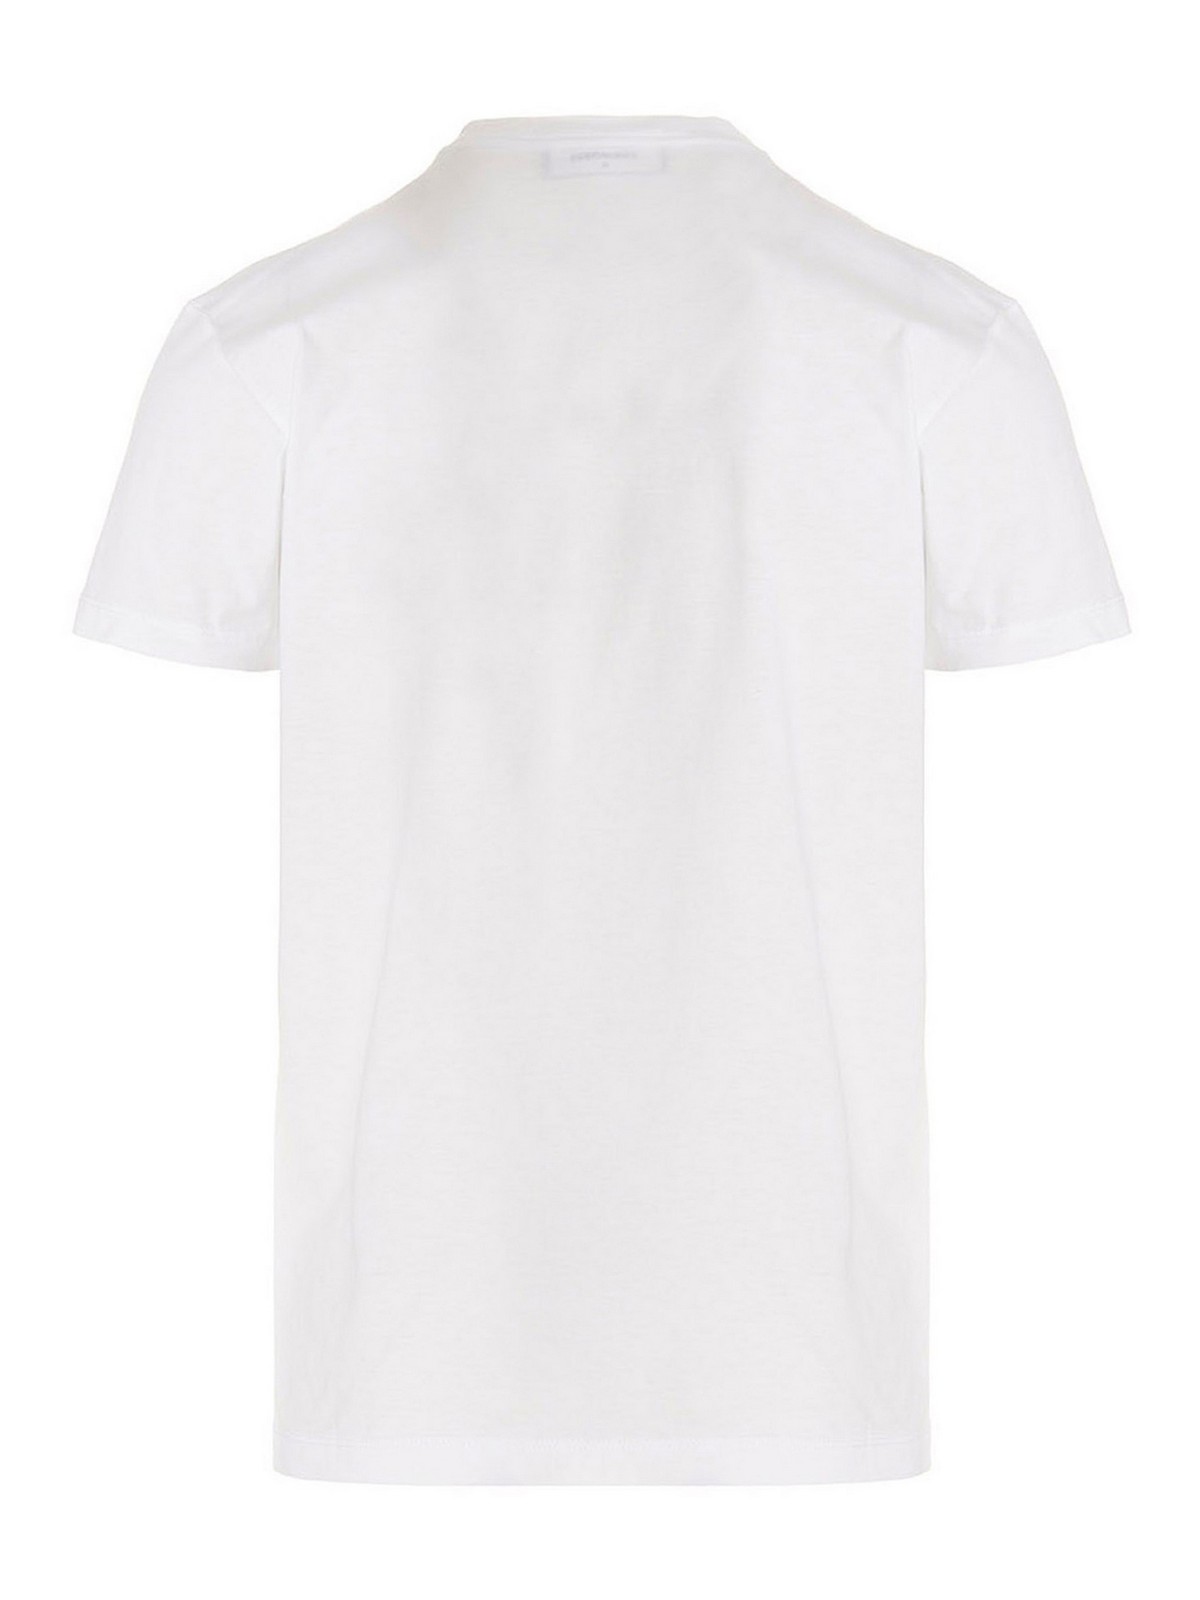 Shop Dsquared2 Camiseta - D2 Surf Beach In White